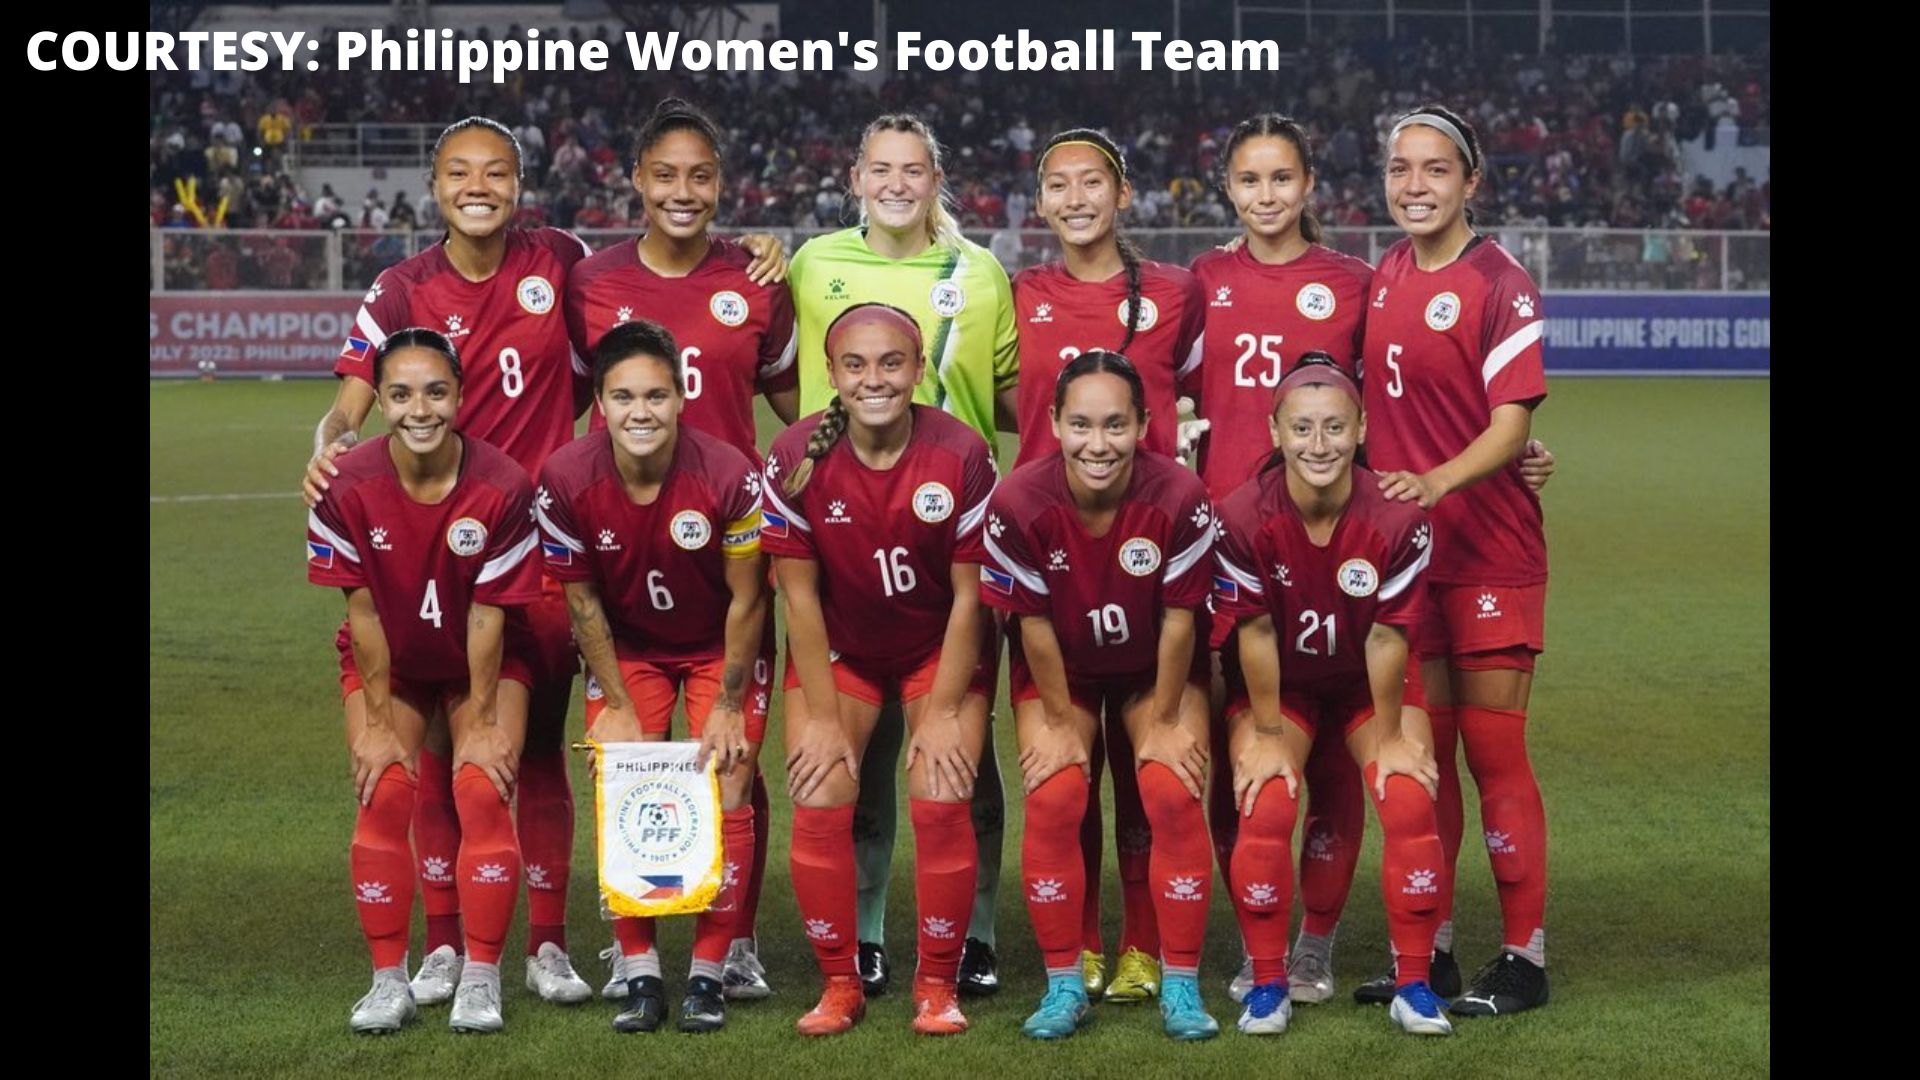 Unang kampeonato nasungkit ng Philippine Women’s Football Team